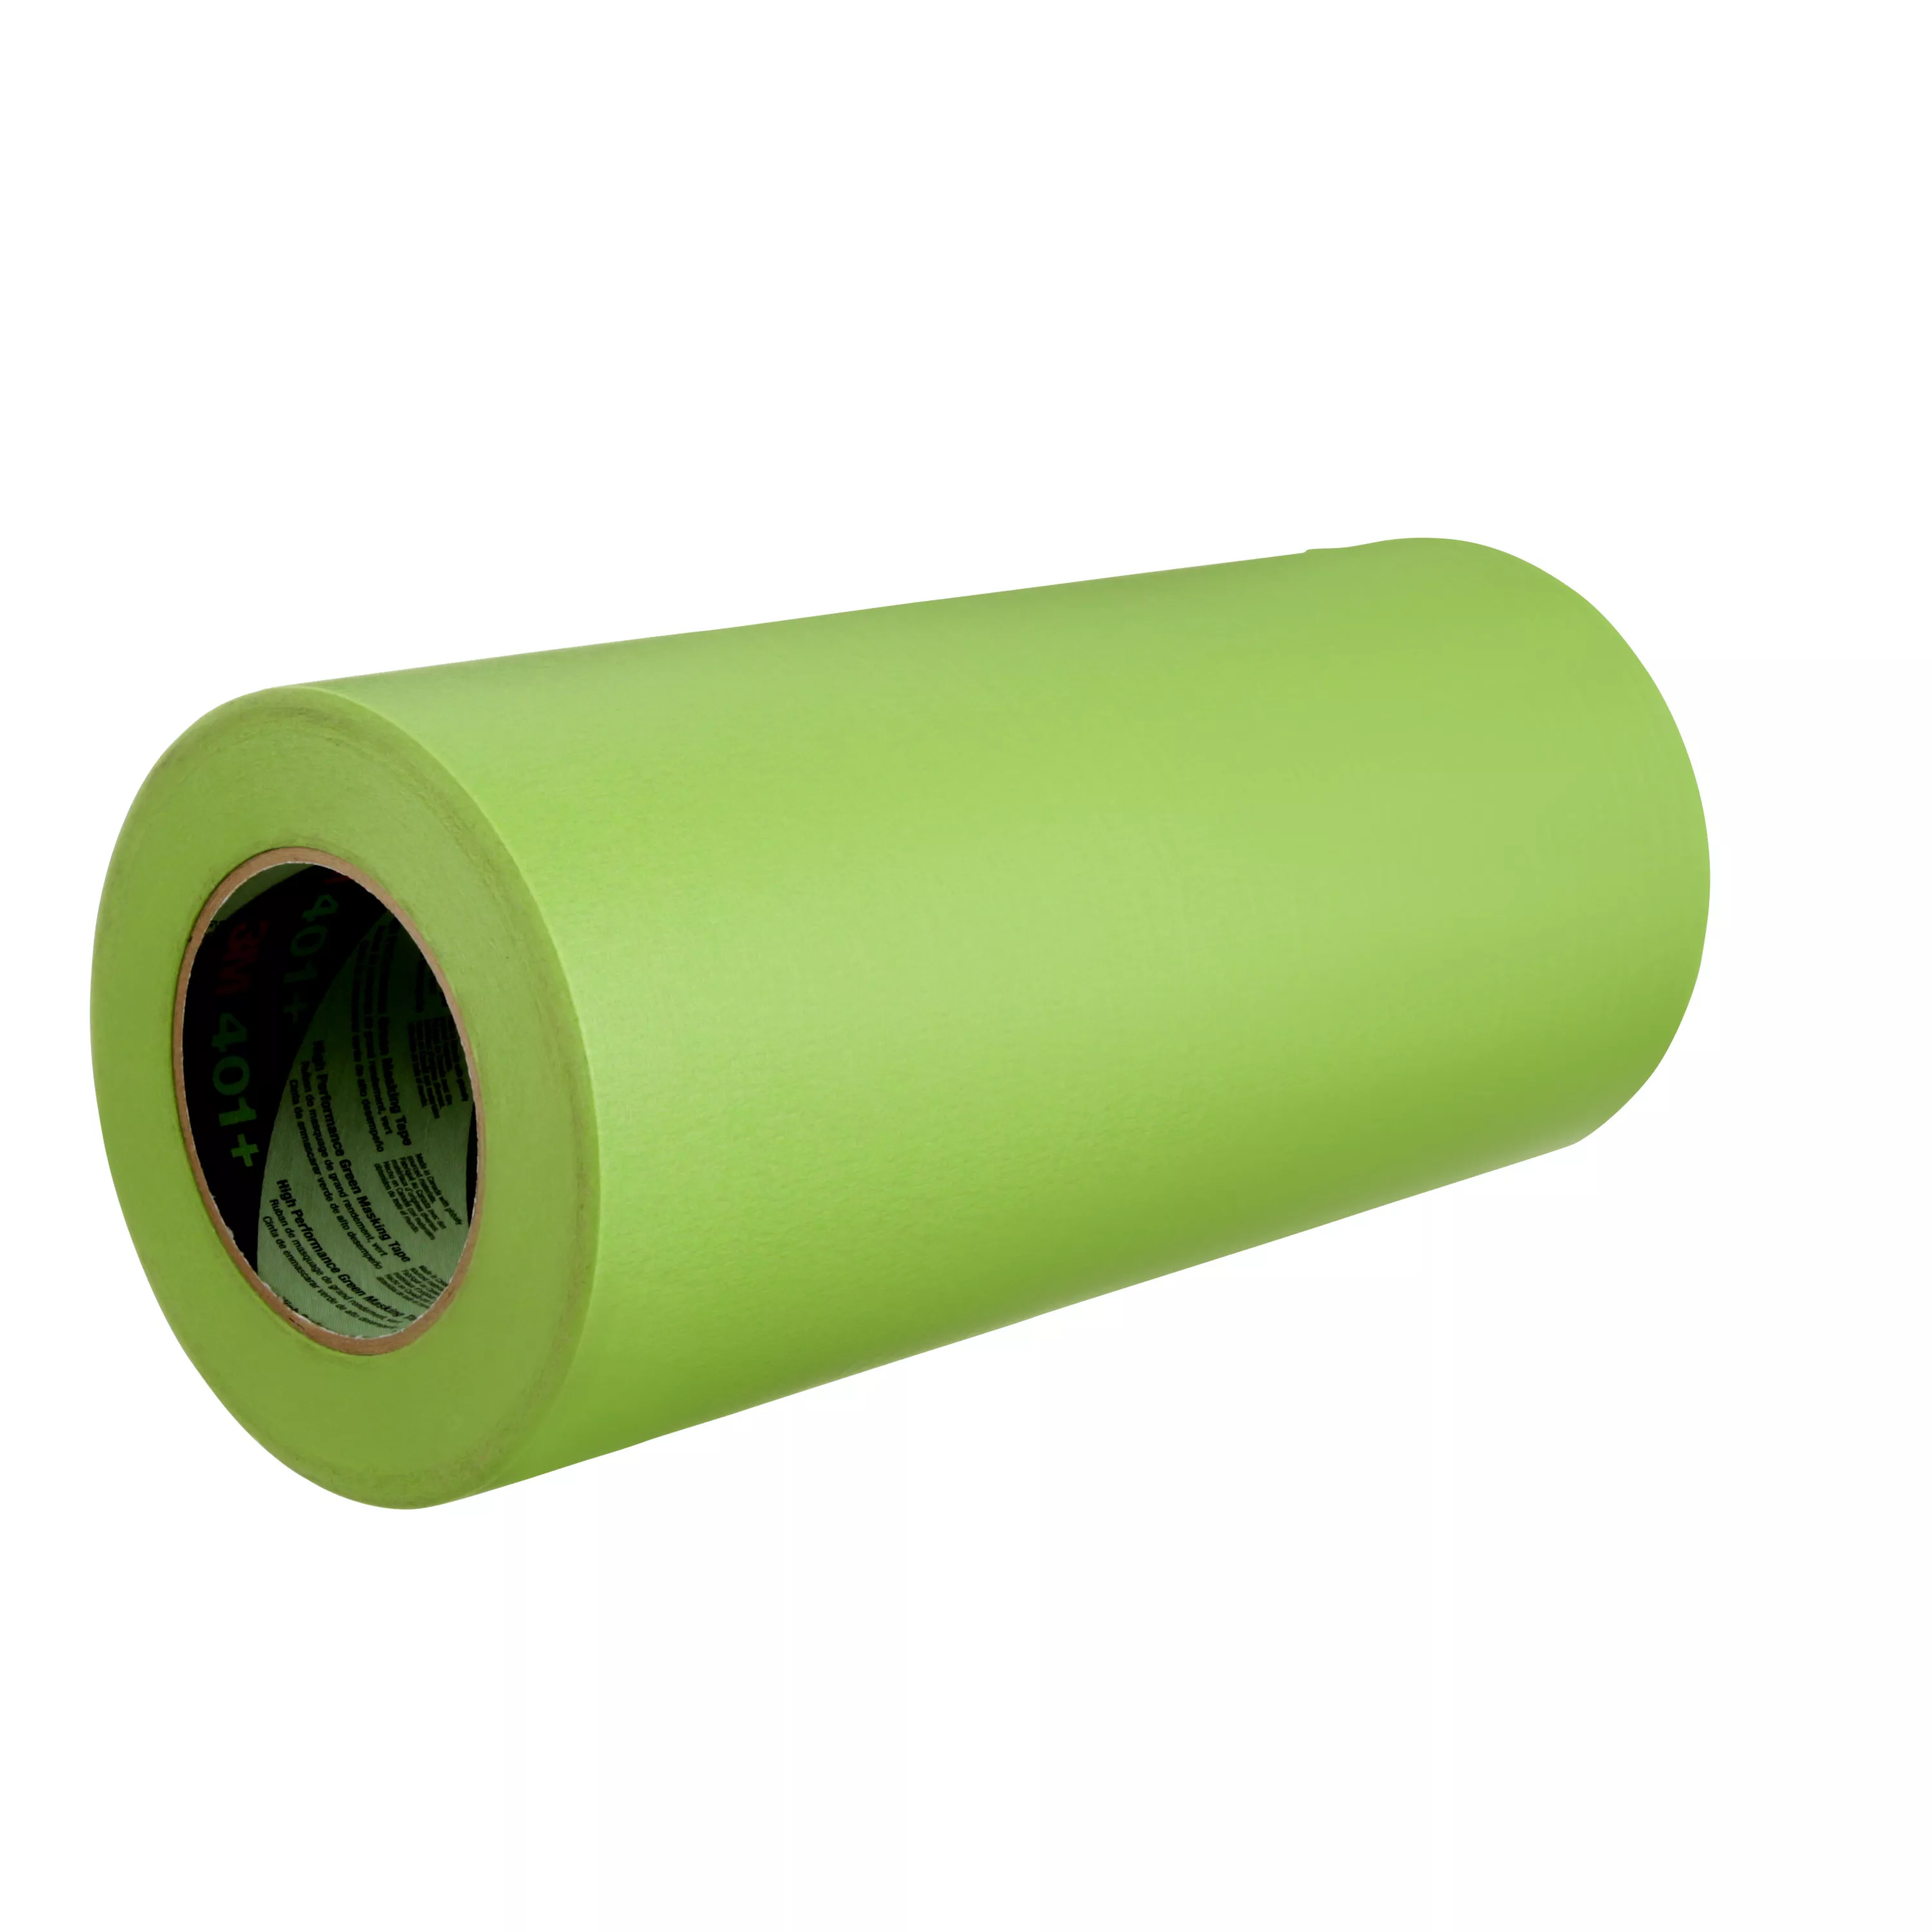 3M™ High Performance Green Masking Tape 401+, 288 mm x 55 m, 6.7 mil, 4
Roll/Case